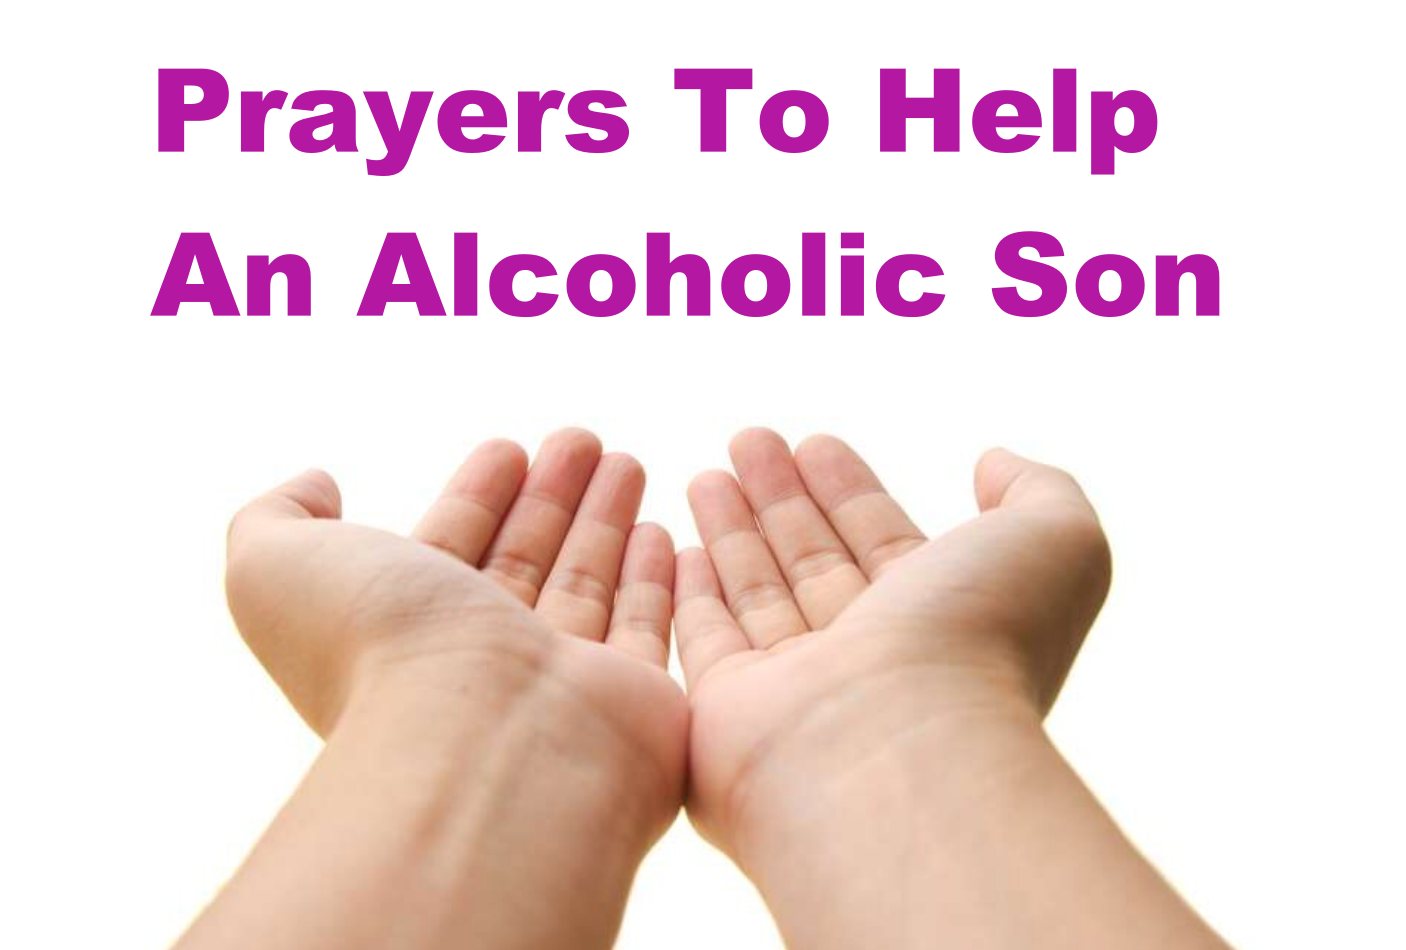  4 Prayers To Help An Alcoholic Son